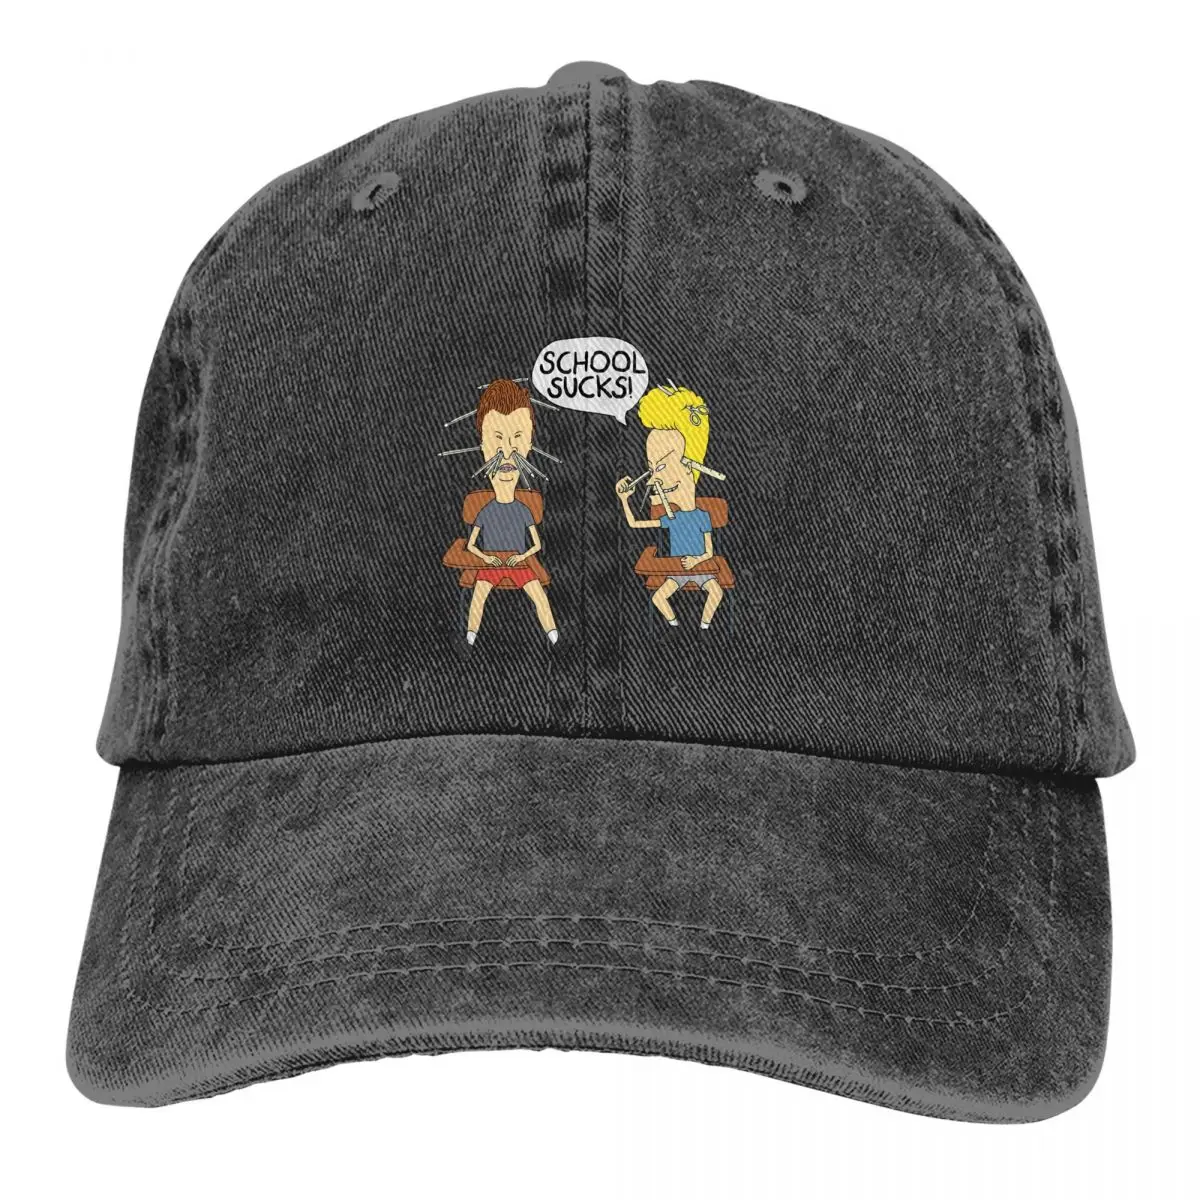 

Beavis and Butthead Funny Sarcastic Cartoon Multicolor Hat Peaked Women's Cap School Sucks Personalized Visor Protection Hats